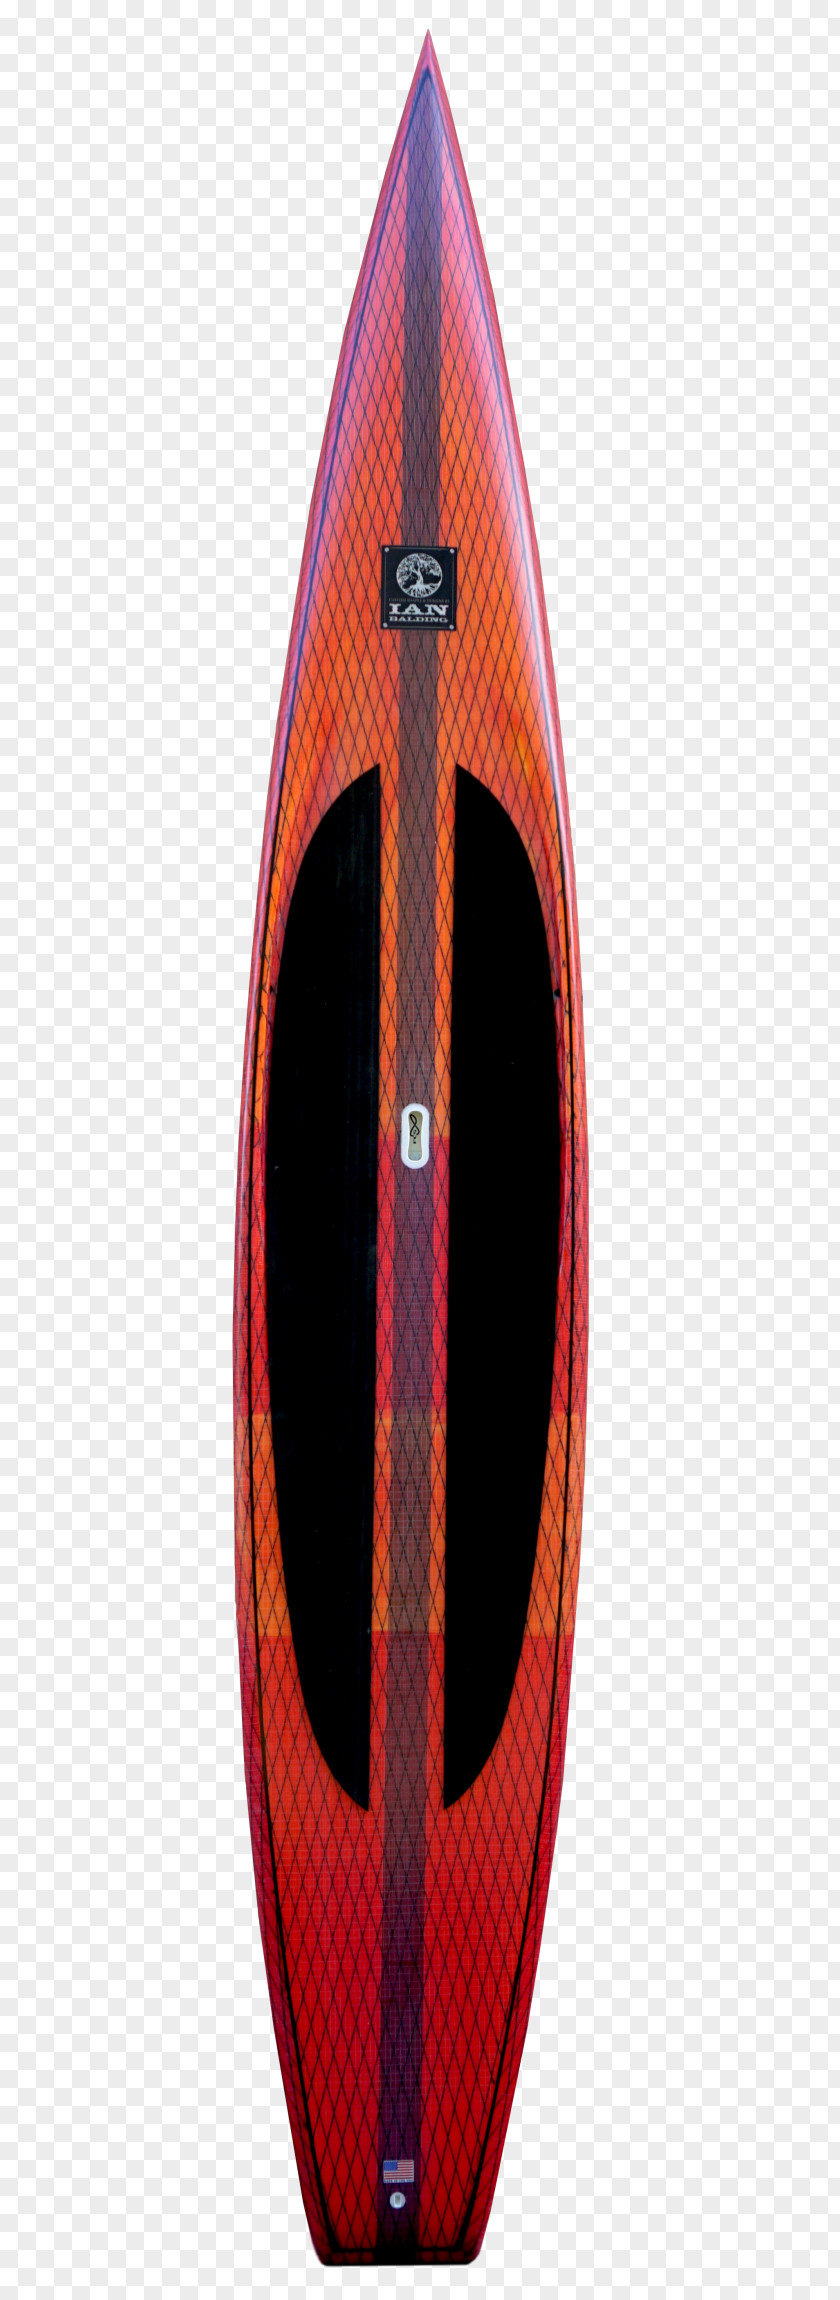 Paddle Standup Paddleboarding Surfboard Ian Balding & Surf Paddling PNG